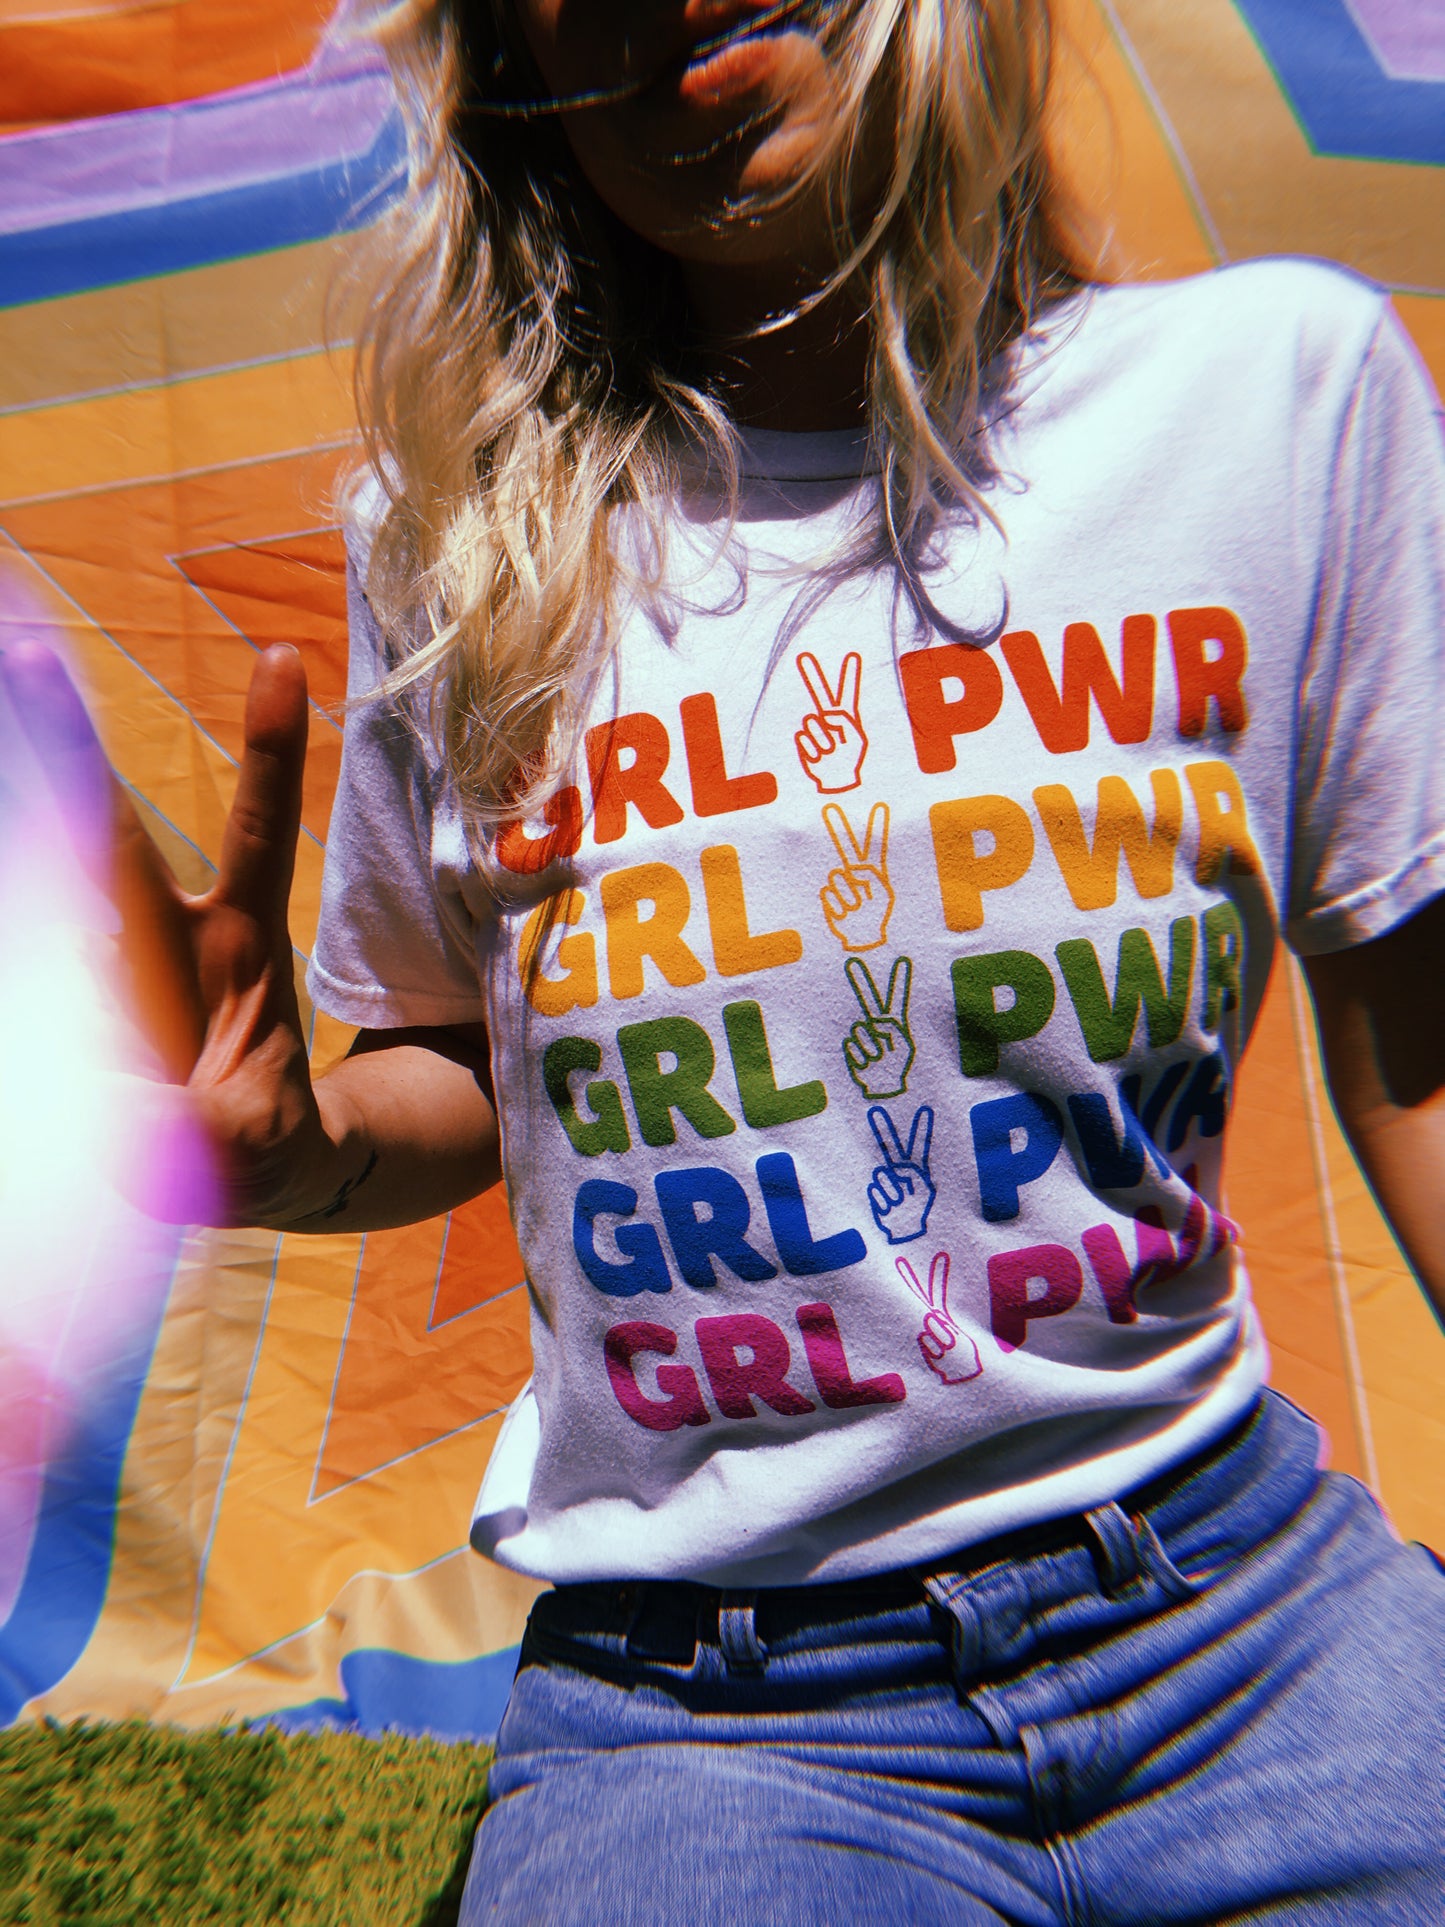   - Girl Power Rainbow Tee - REDWOLF